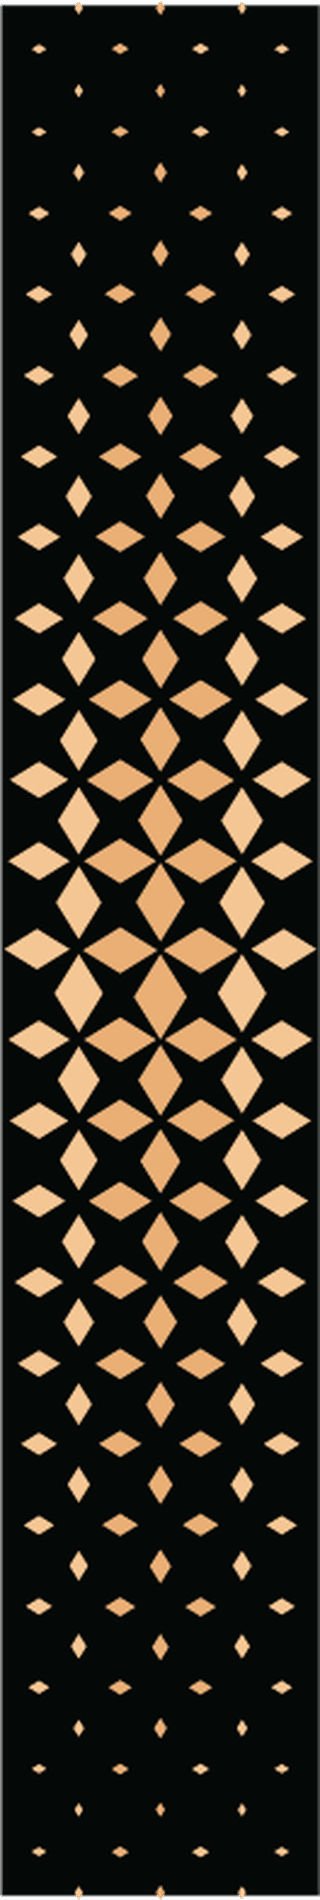 decorativepattern-templates-collection-elegant-retro-repeating-symmetric-788190